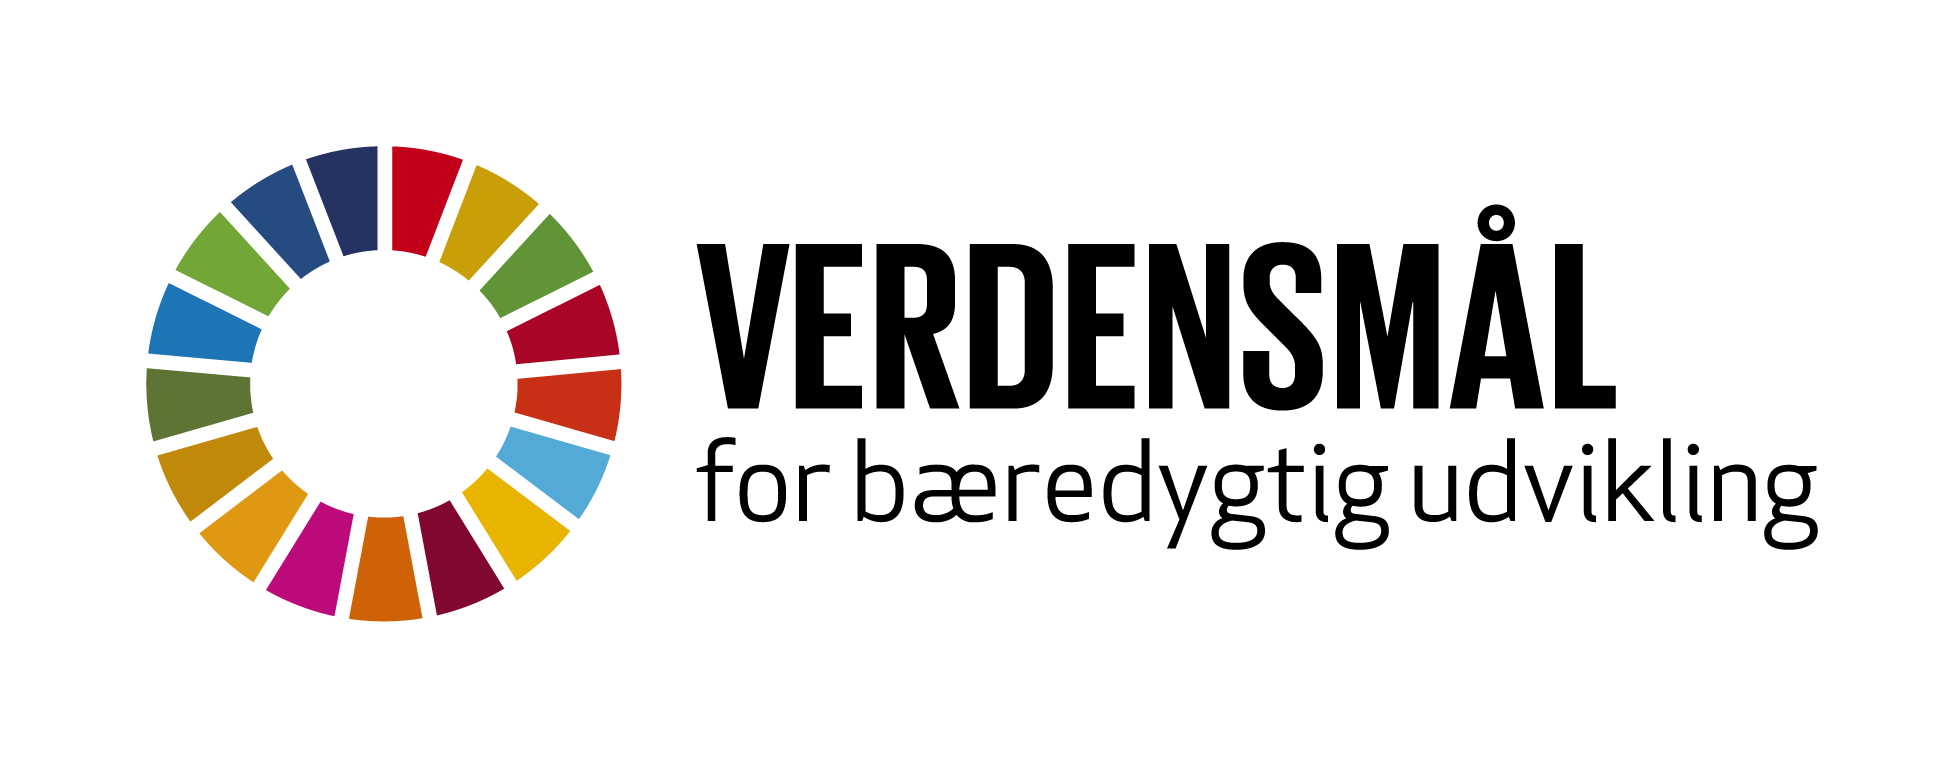 UN's Sustainable Development Goals Logo